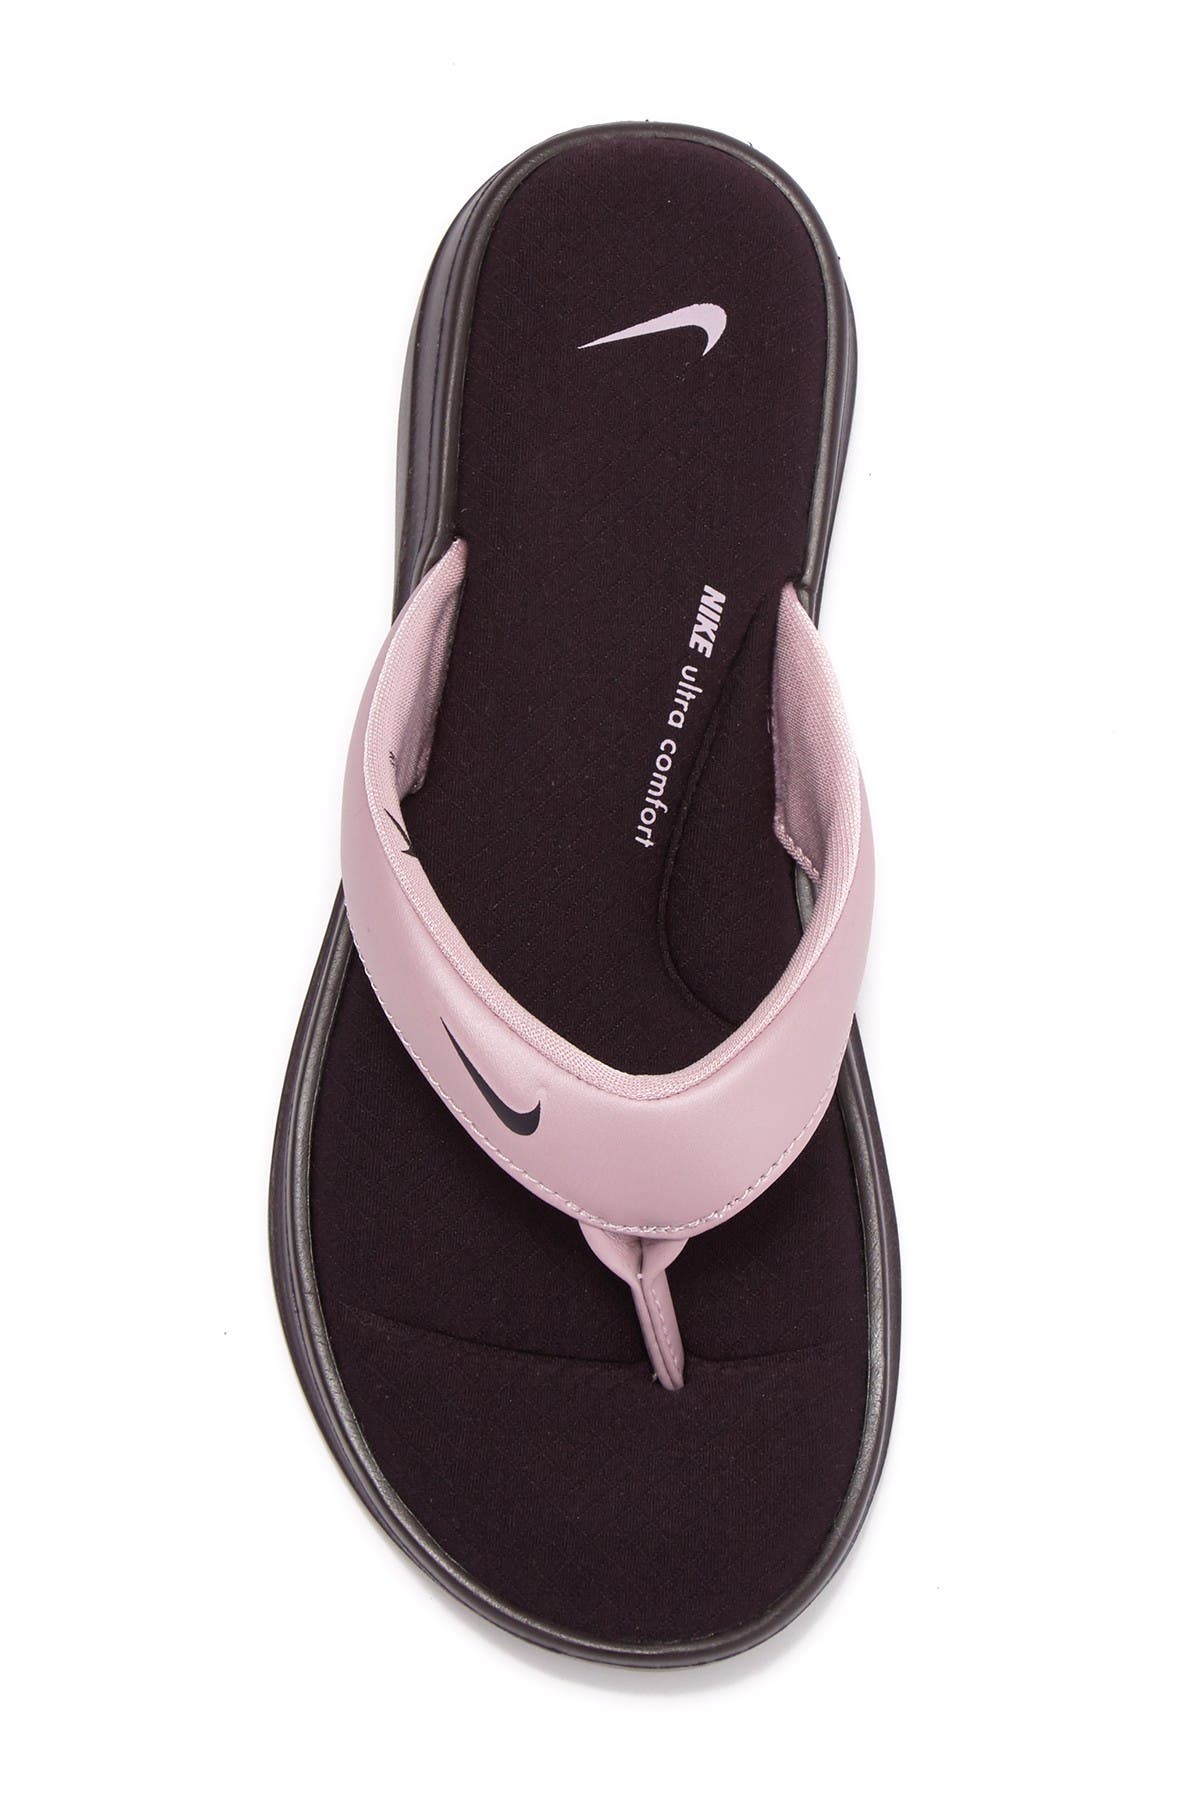 nike women's ultra comfort 3 flip flops